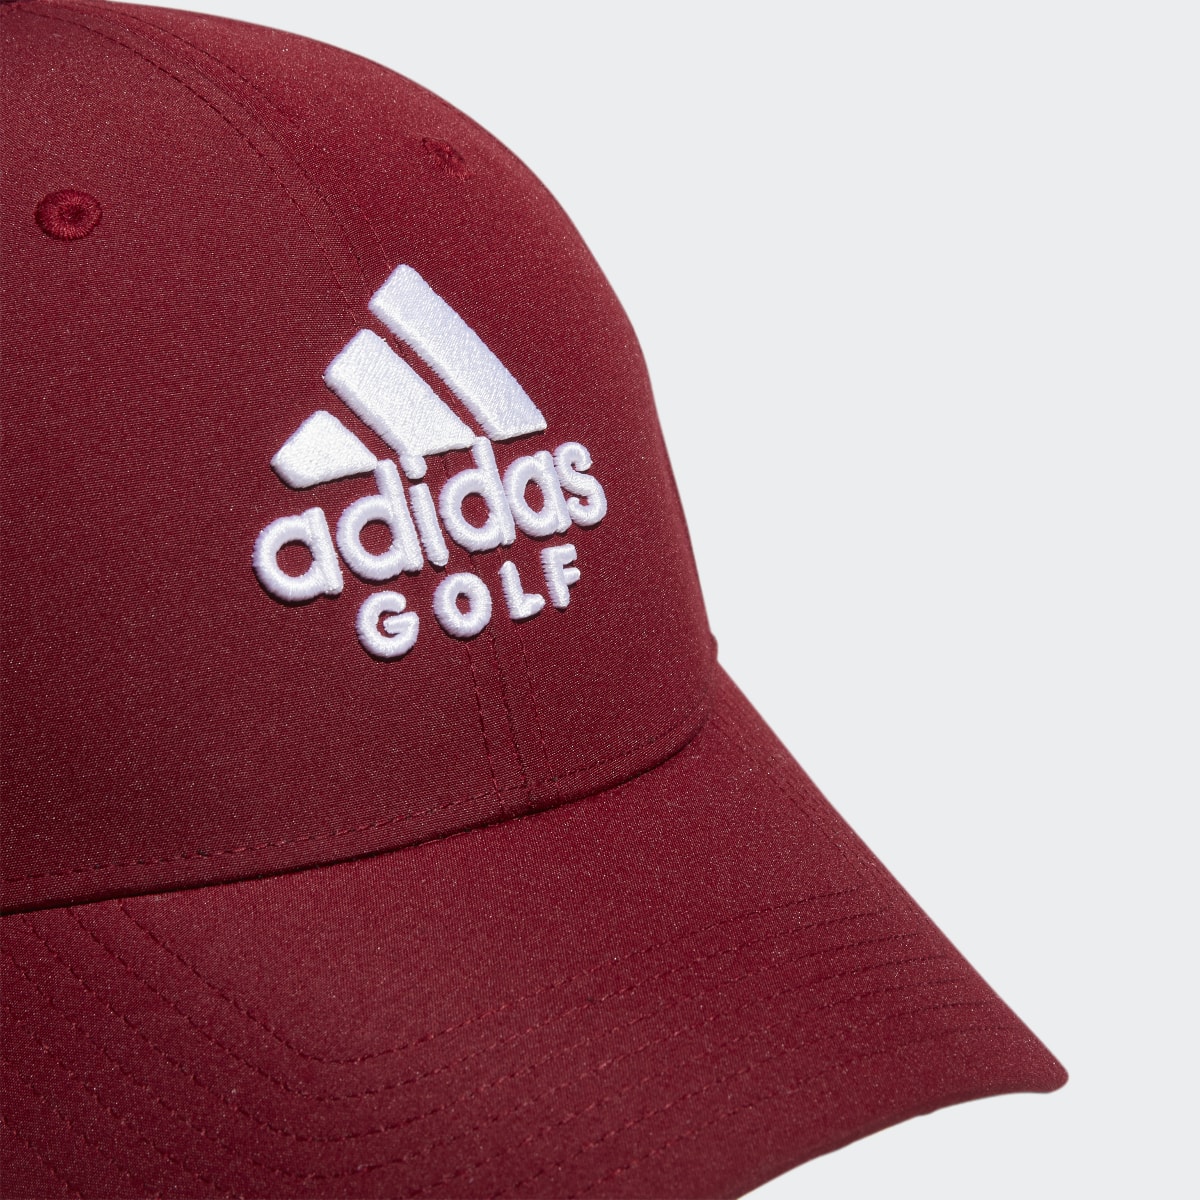 Adidas Cappellino da golf Performance. 5